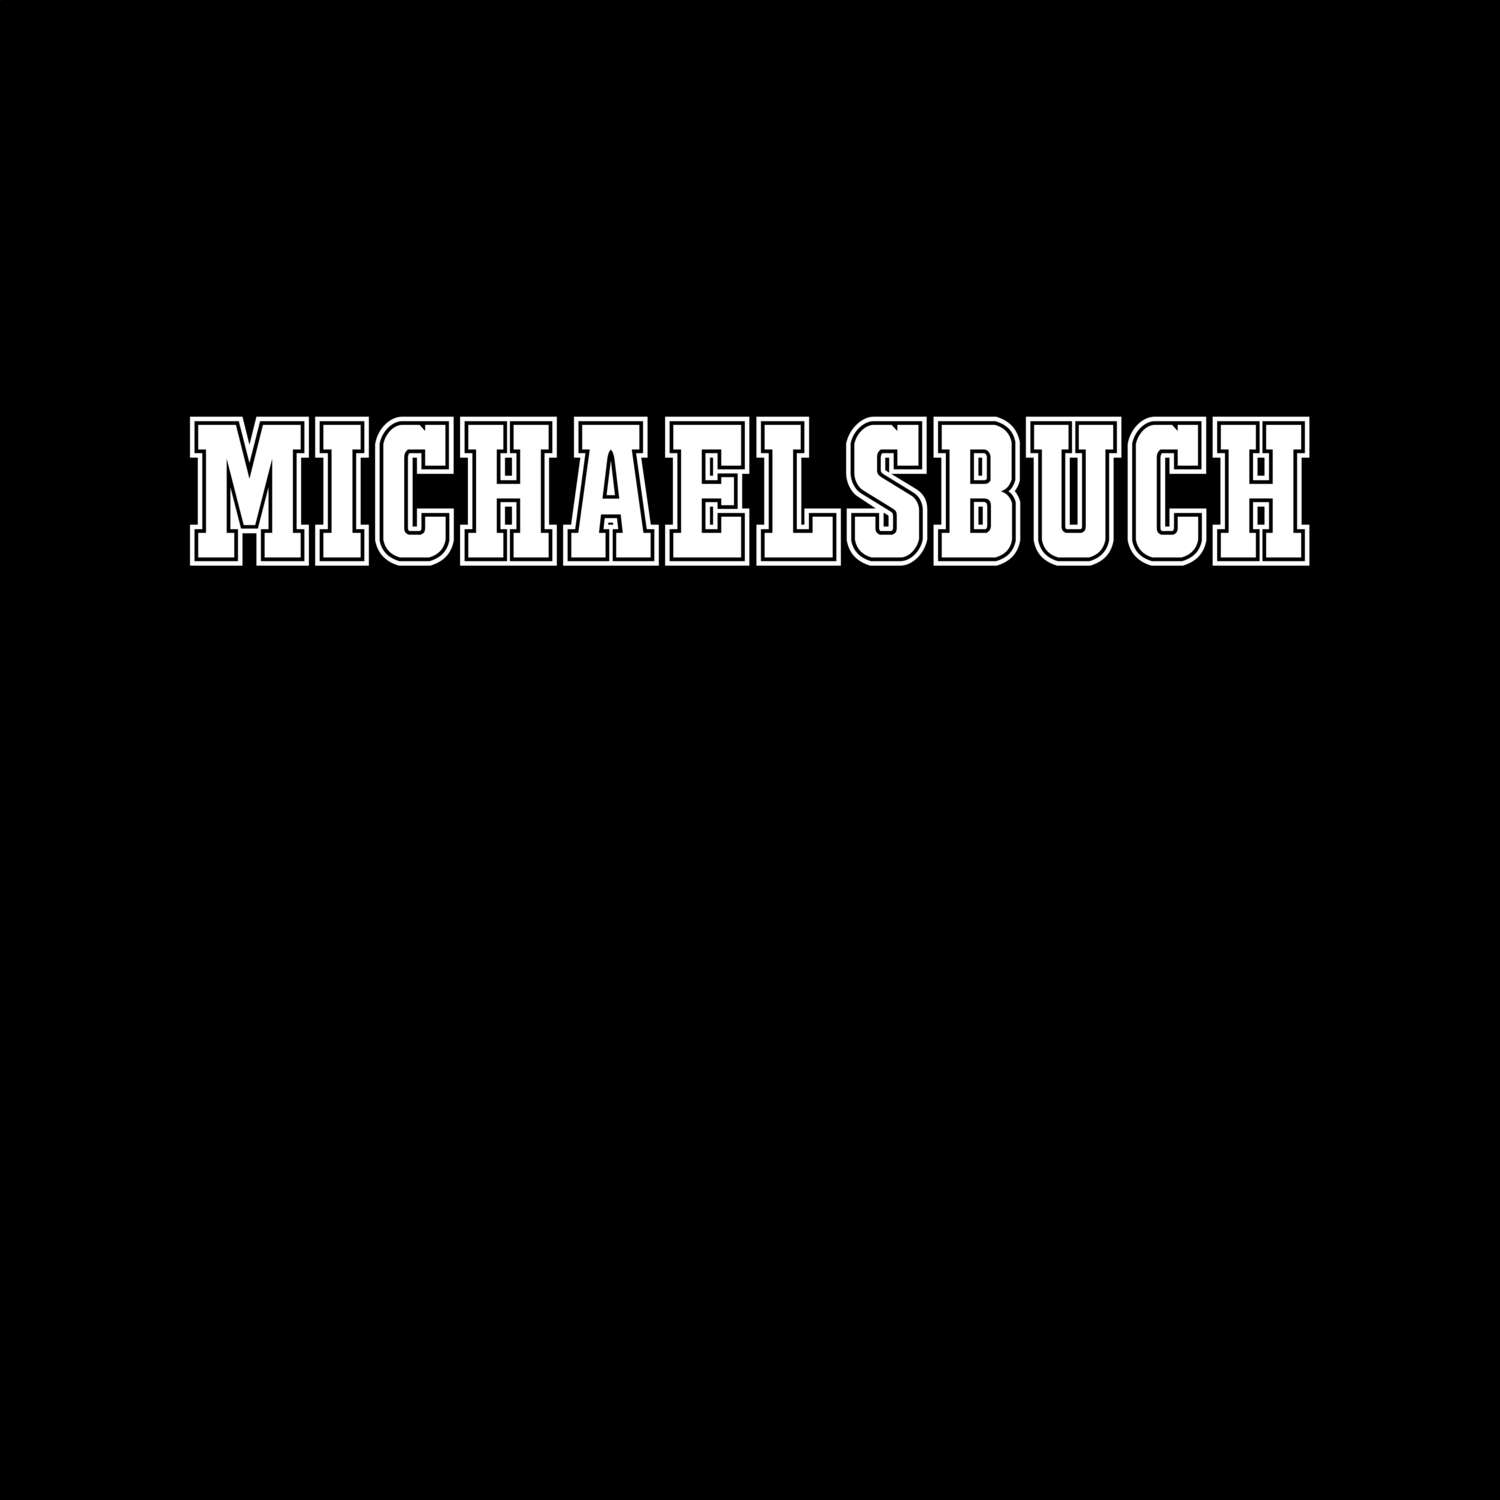 Michaelsbuch T-Shirt »Classic«